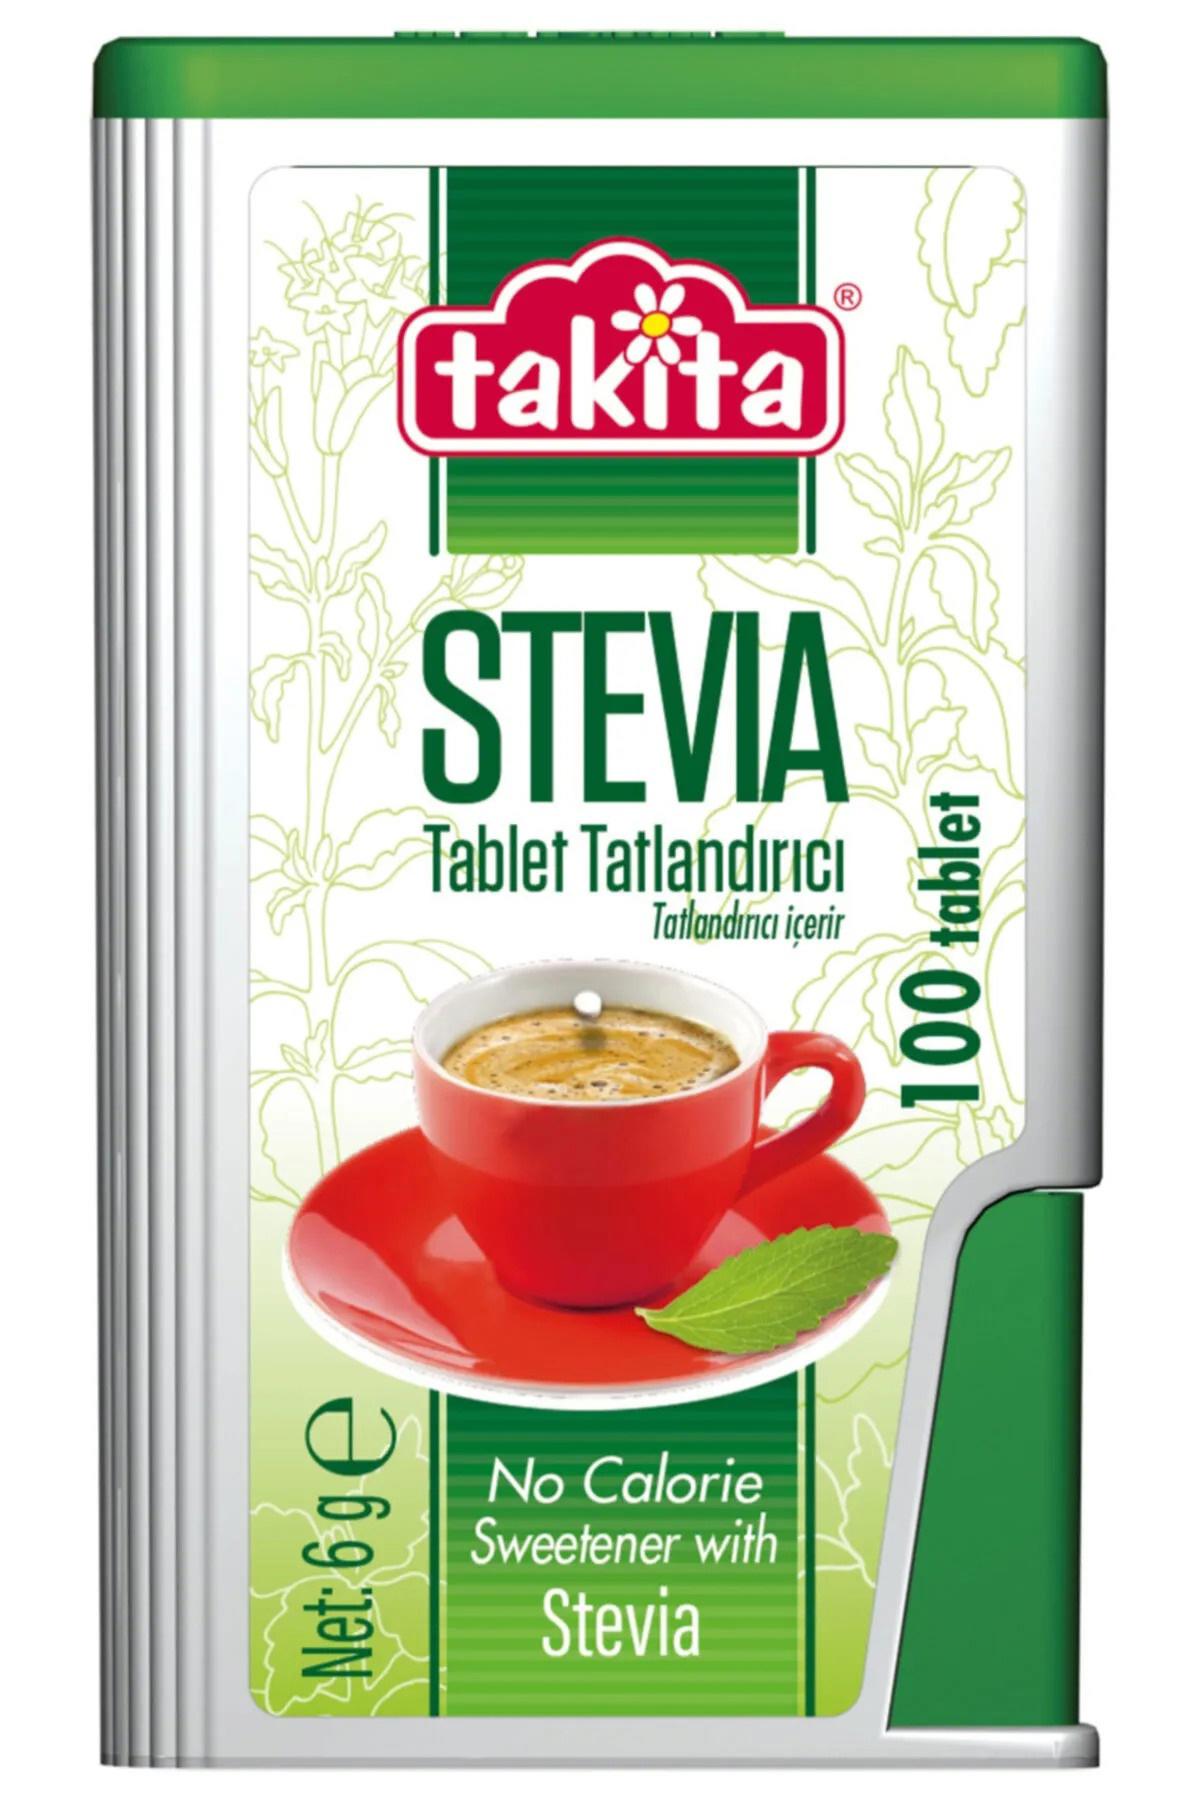 Takita Stevia Tatlandırıcı 100 Tablet